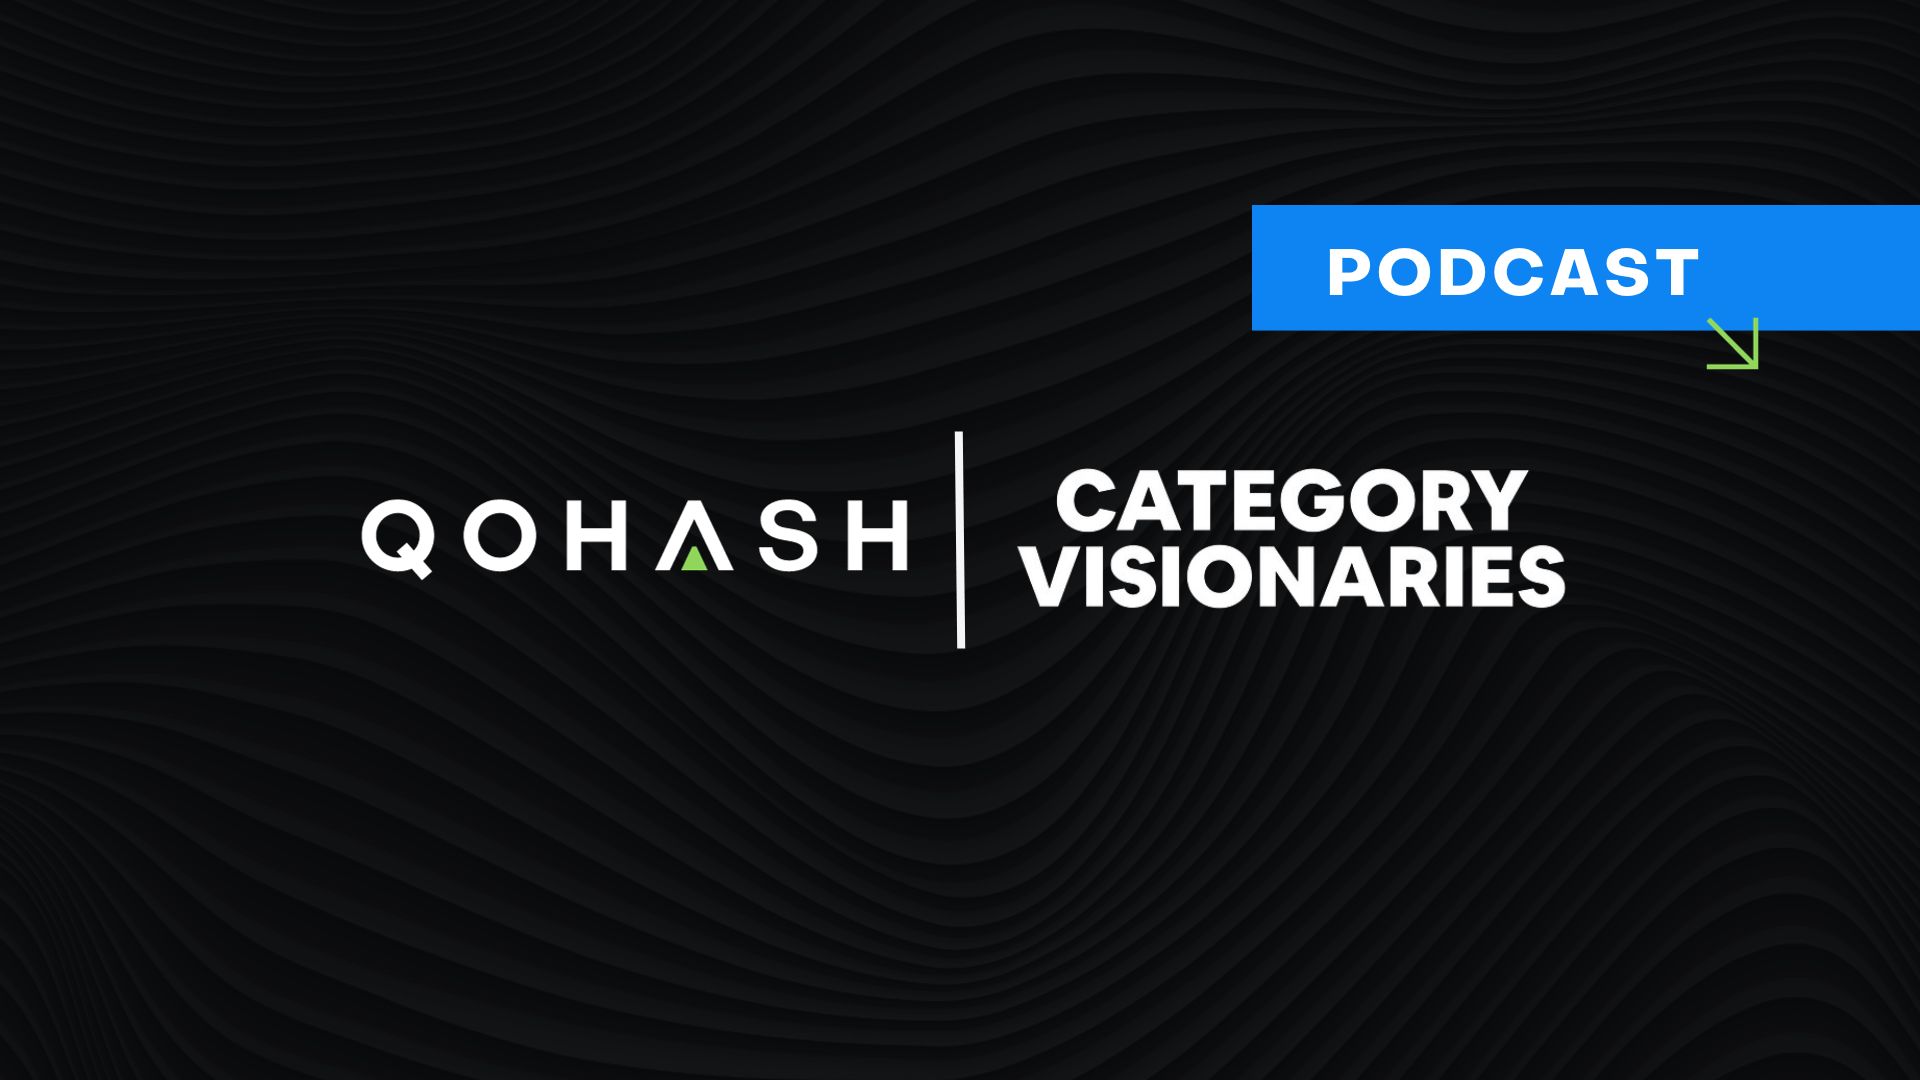 Qohash podcast category visionaries